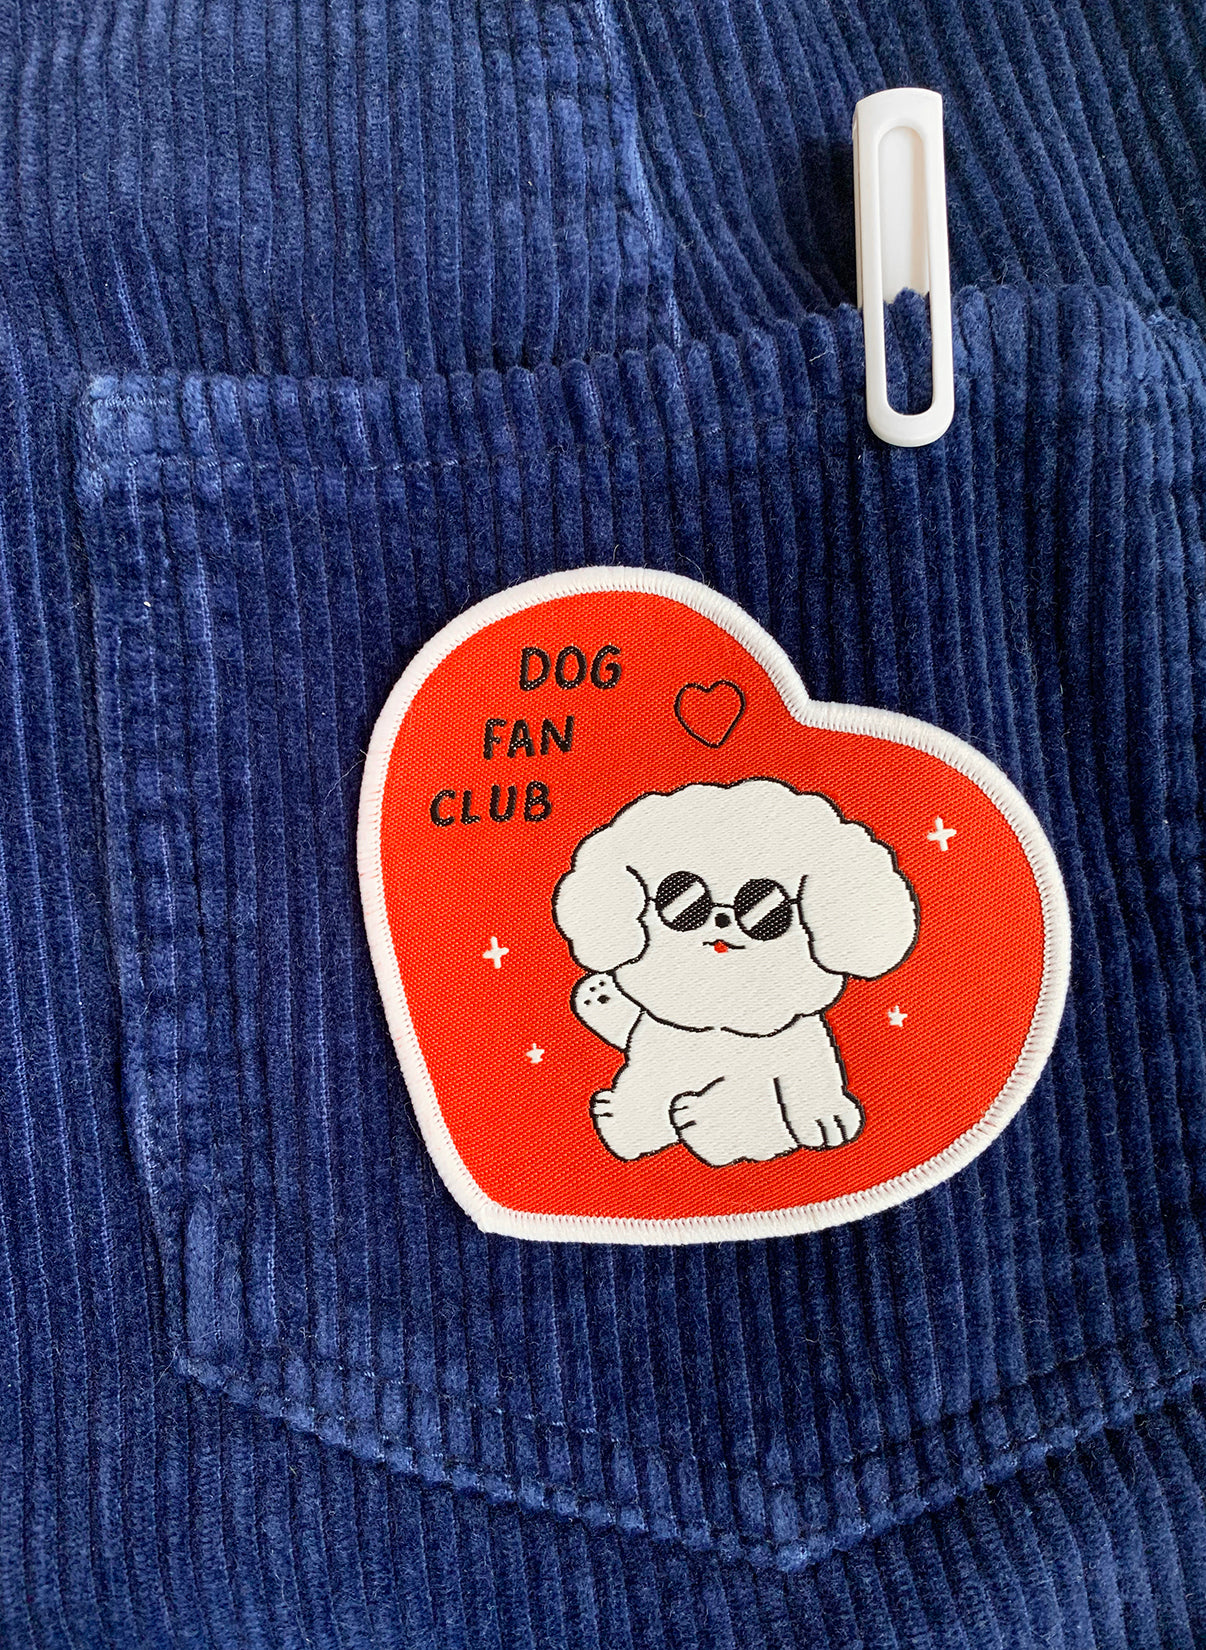 "Dog Fan Club" Iron-on Patch